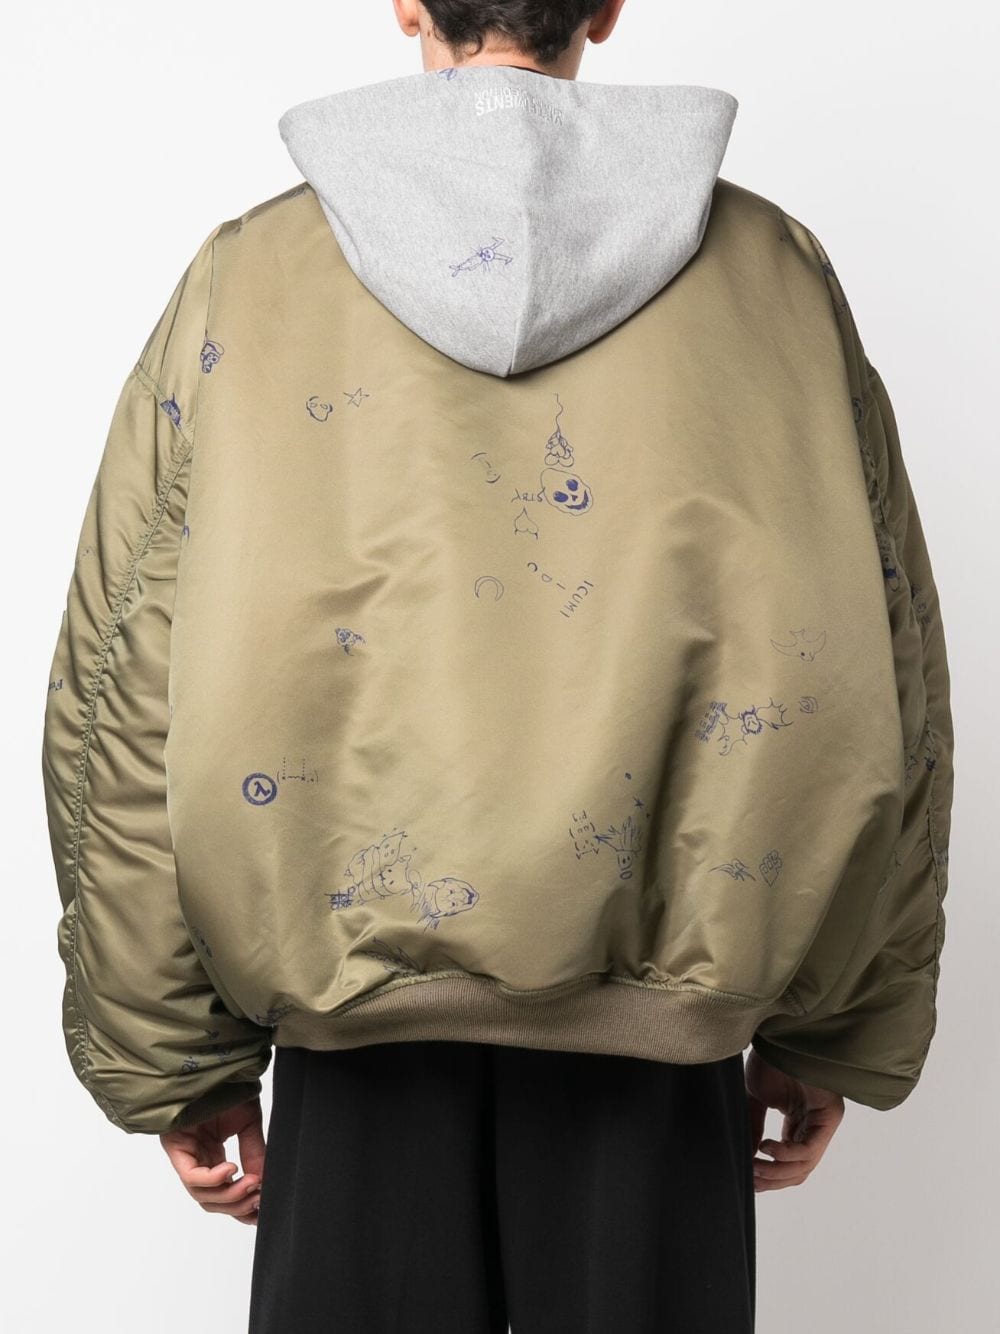 doodle-print bomber jacket